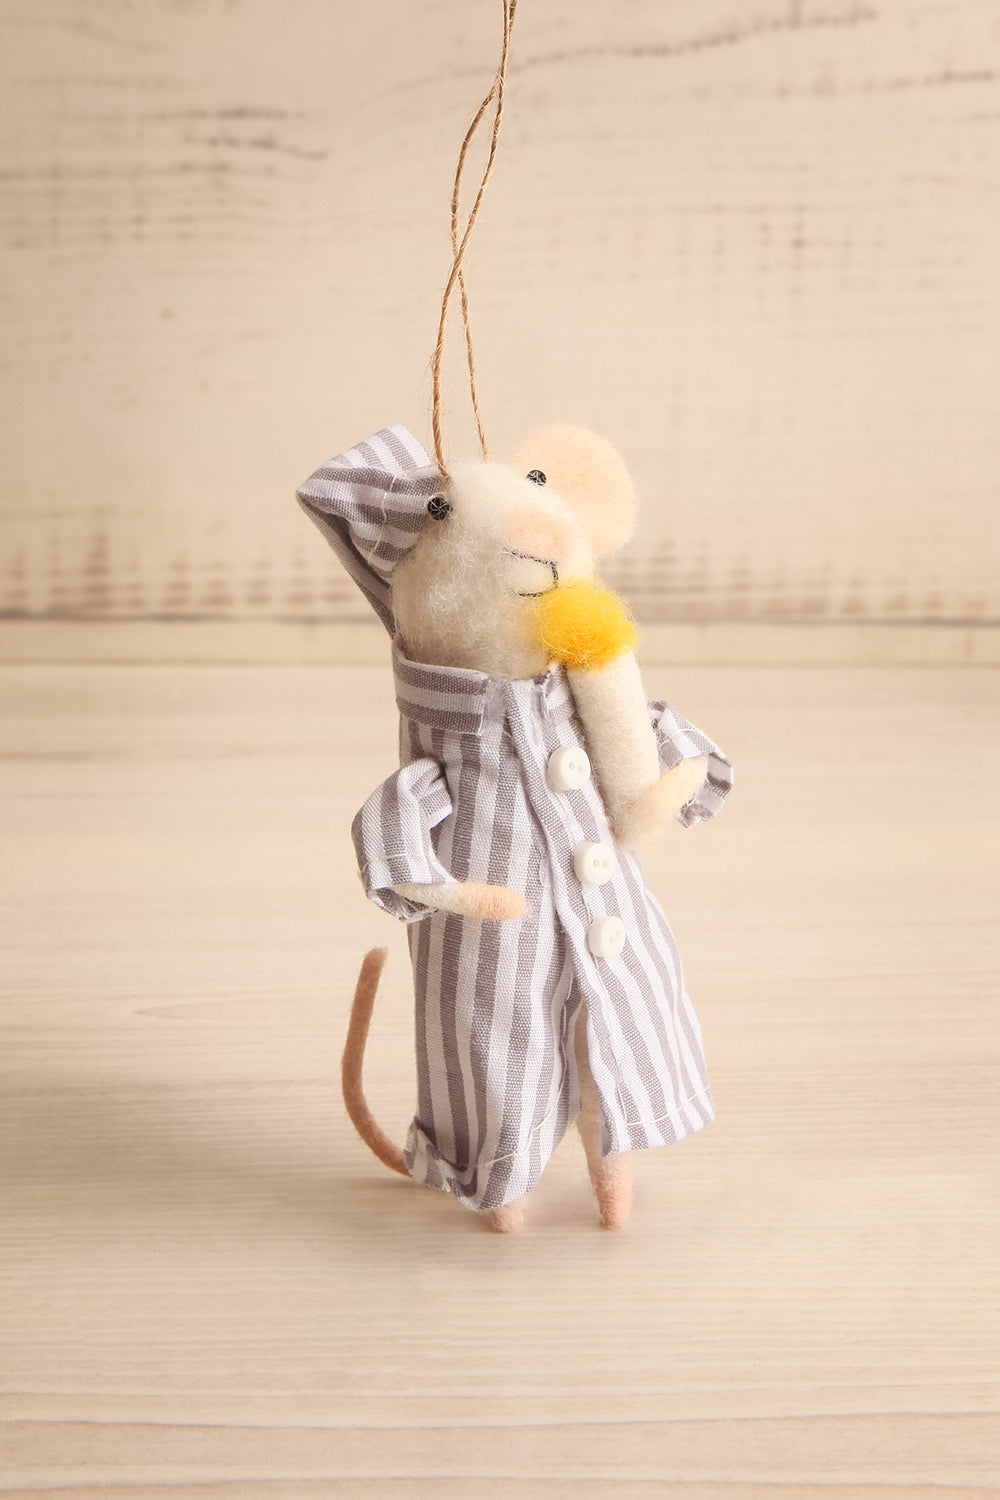 Pyjama Mouse Holiday Ornament | Maison garçonne wee wilky winky